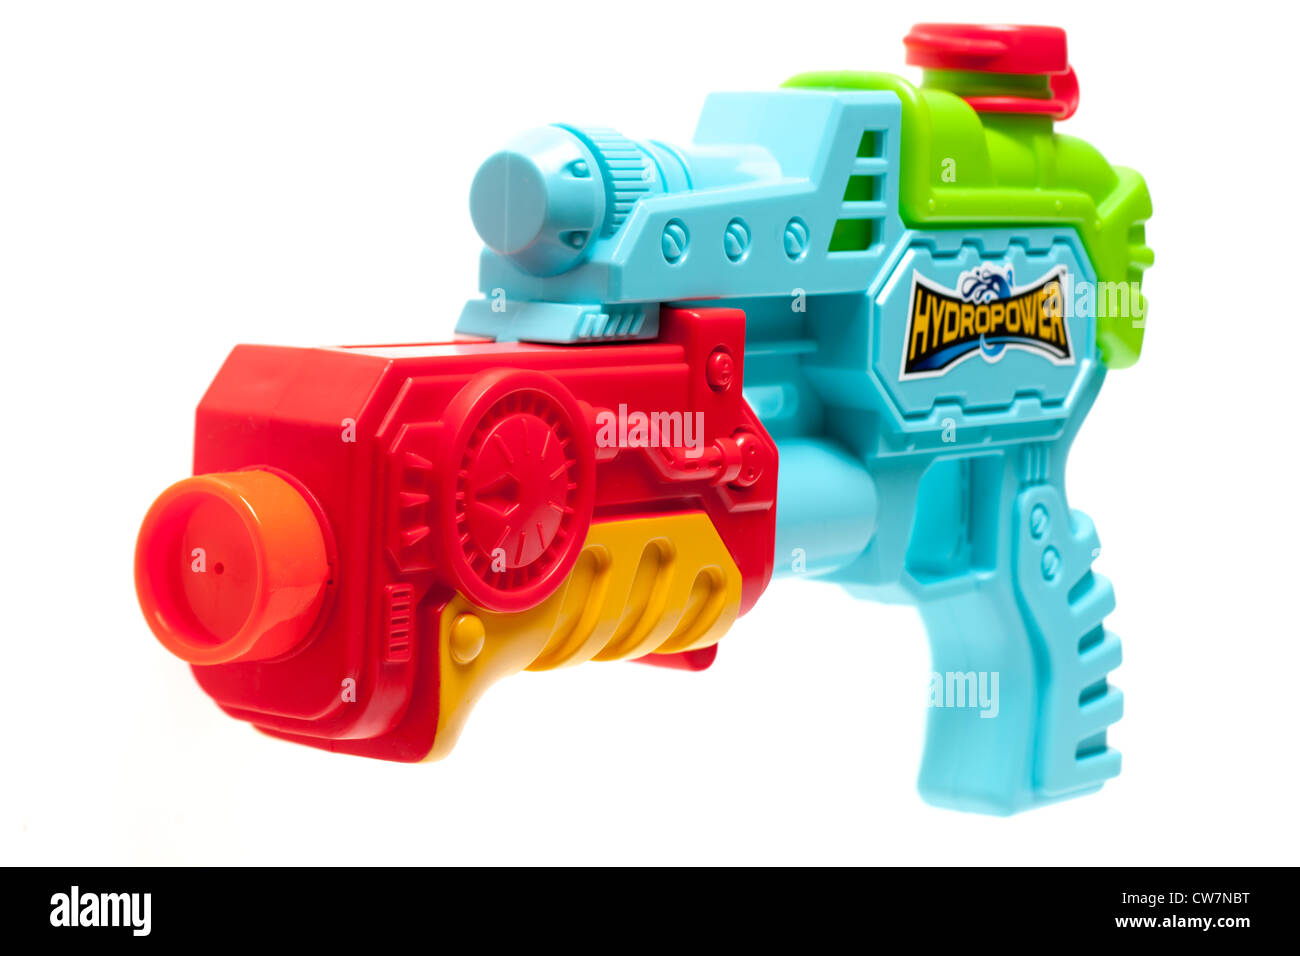 Toy water pistol Stock Photo